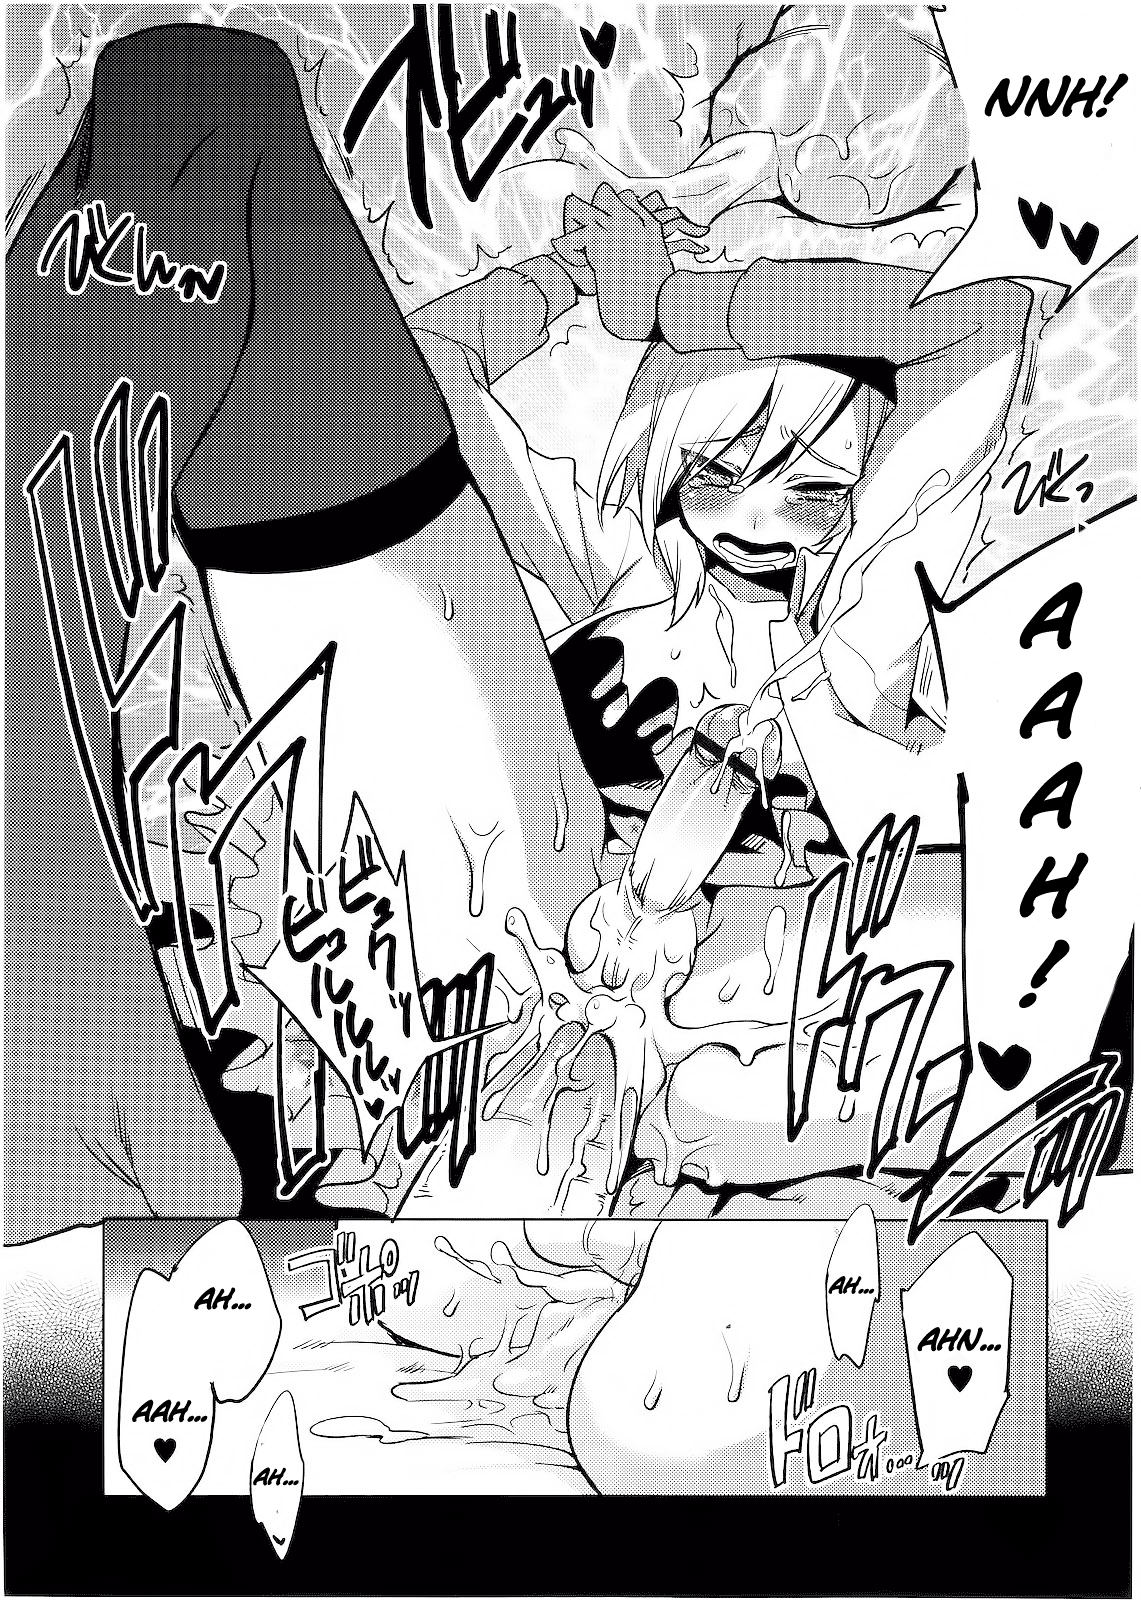 [Suemitsu Dicca] Hiki Kari | Bait and Attack (Koushoku Shounen Vol. 01) [Italian] [Hentai Fantasy] [すえみつぢっか] 引き狩り (好色少年 Vol.01) [イタリア翻訳]